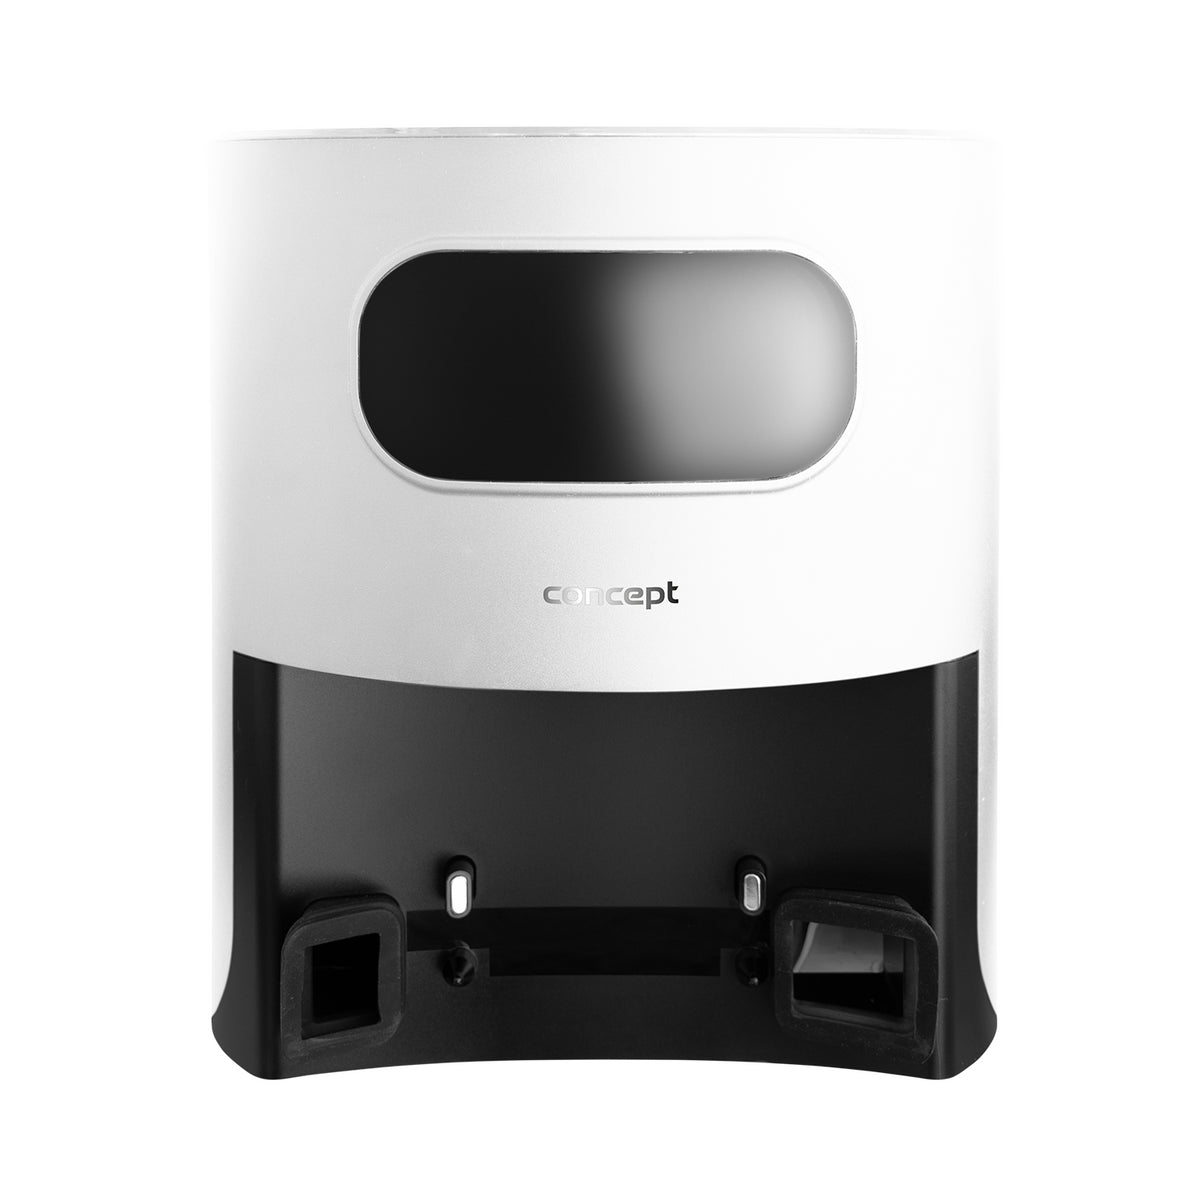 Robotický vysavač Concept Perfect Clean Laser VR3350, 2v1